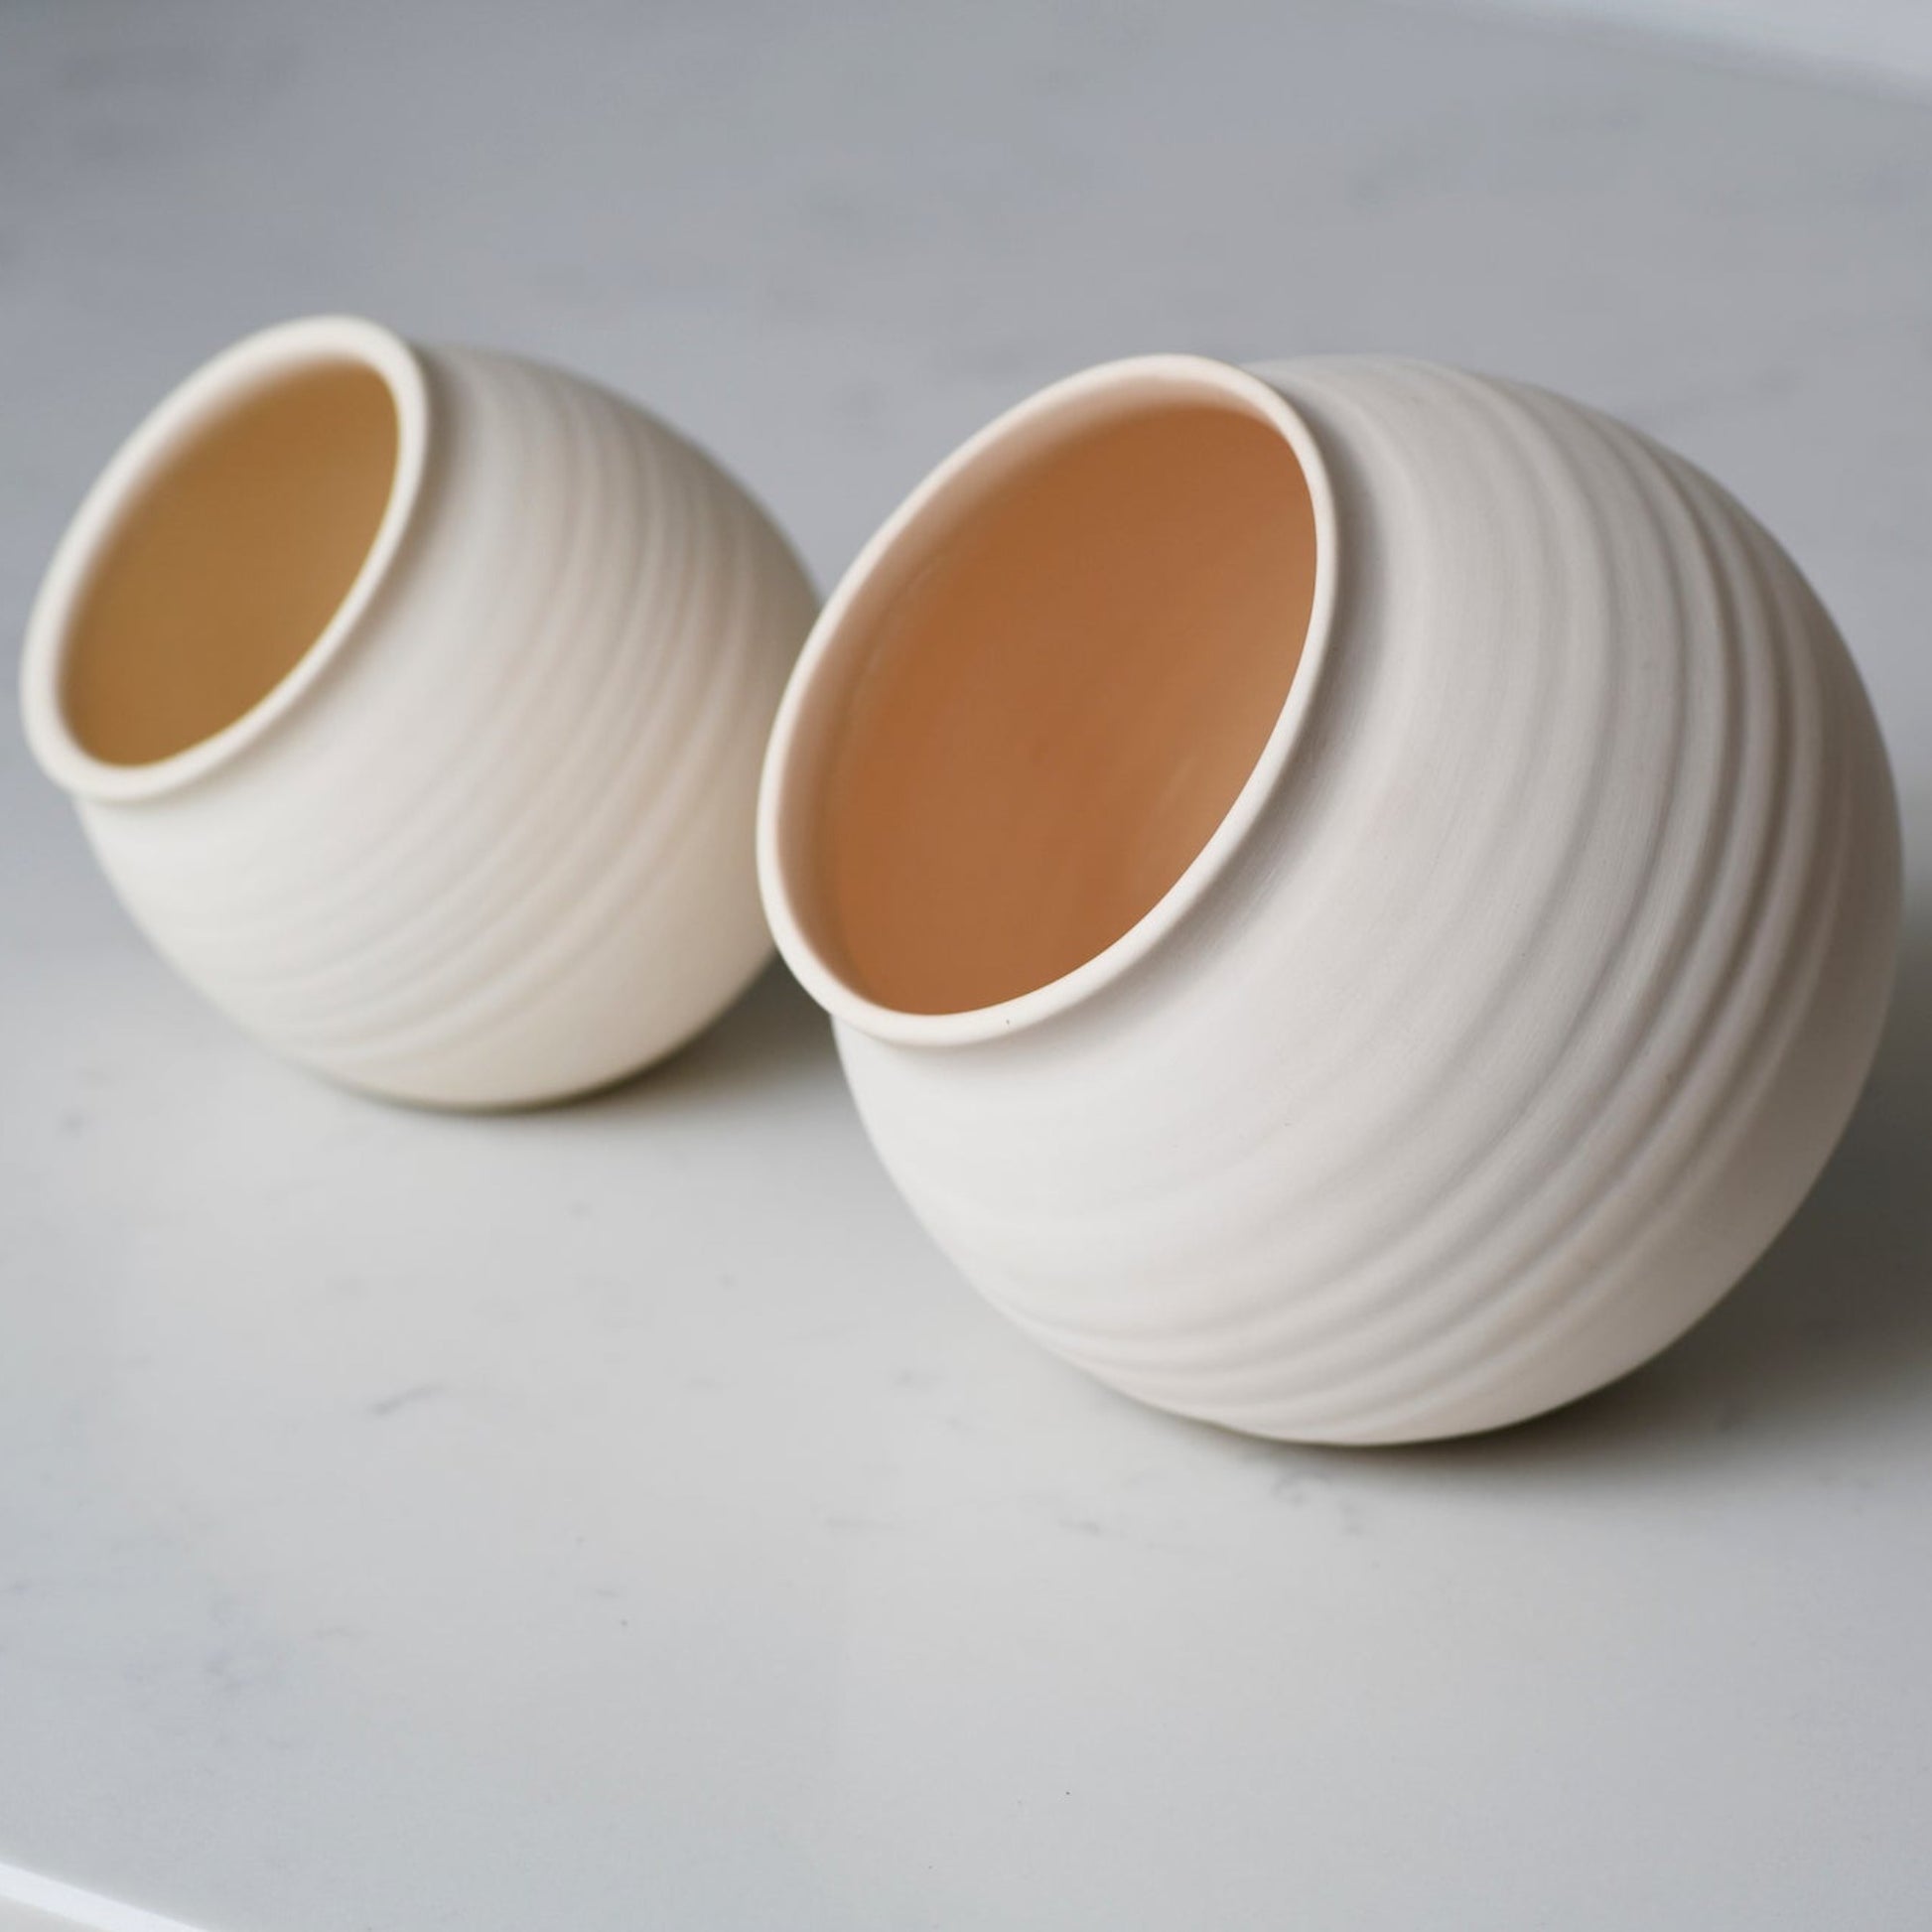 Large and small handmade ceramic salt cellars